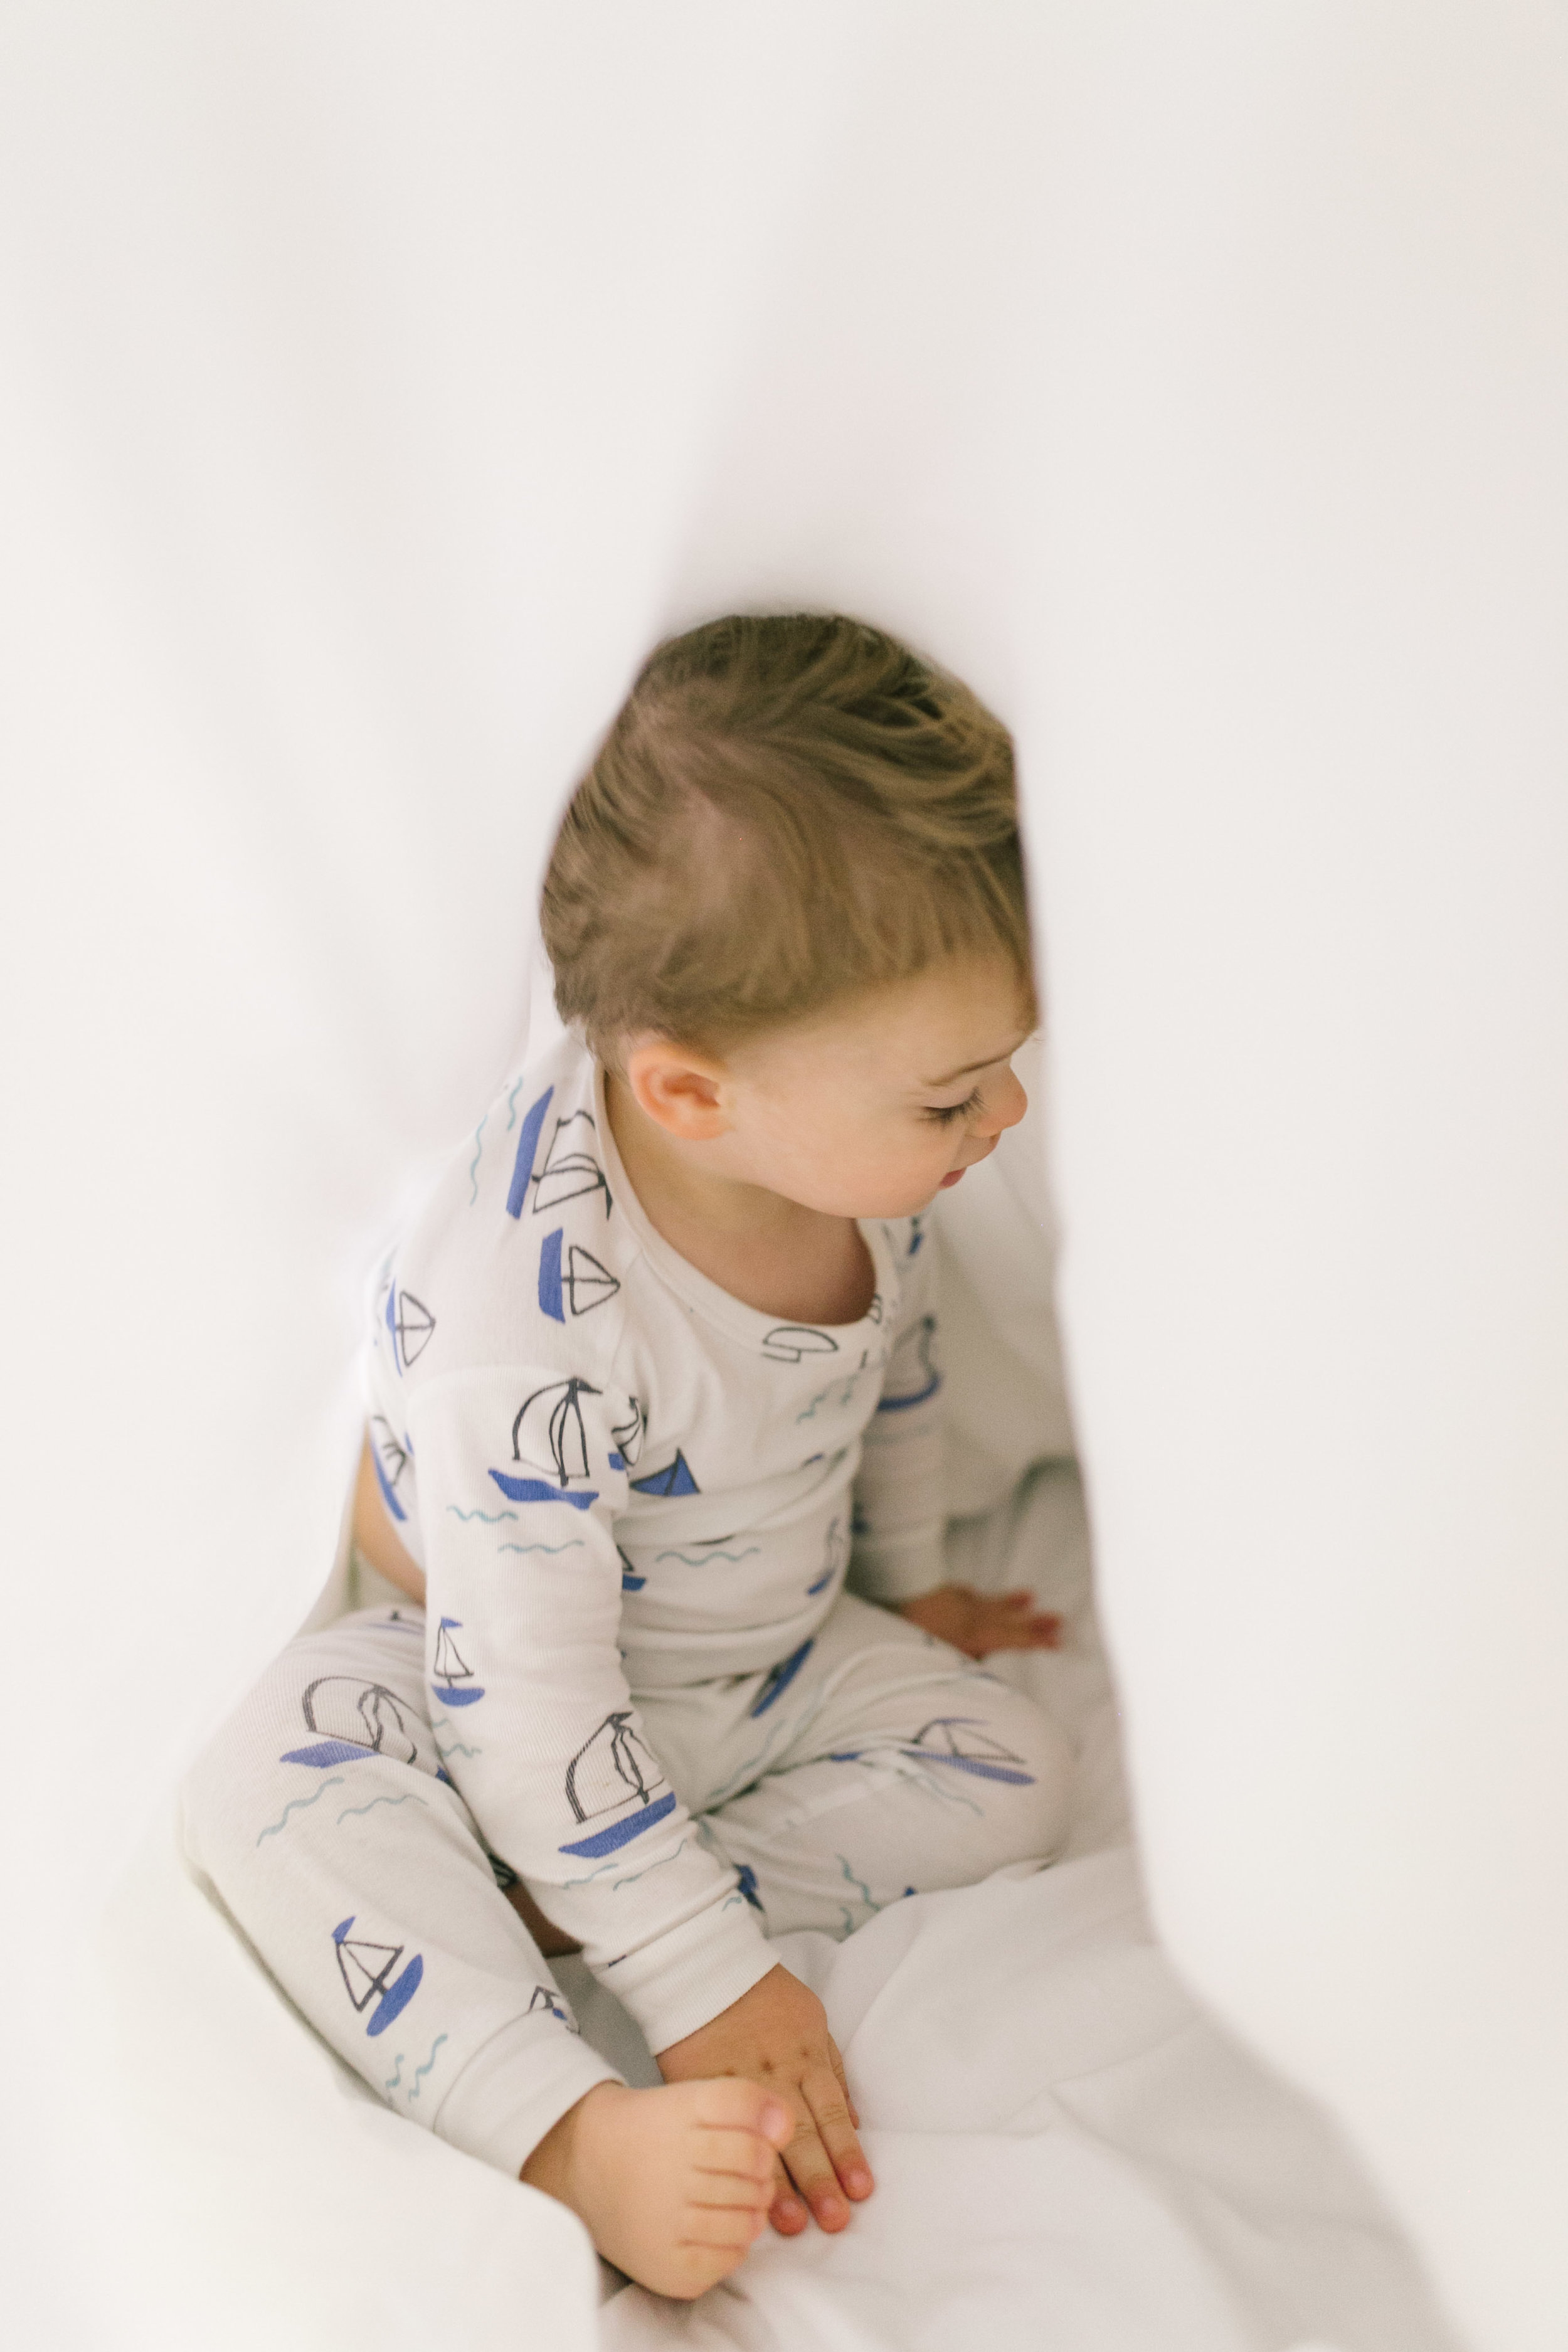 Playful toddler lifestyle portraits, documentary style photography | Chelsea Macor Photography-13.jpg